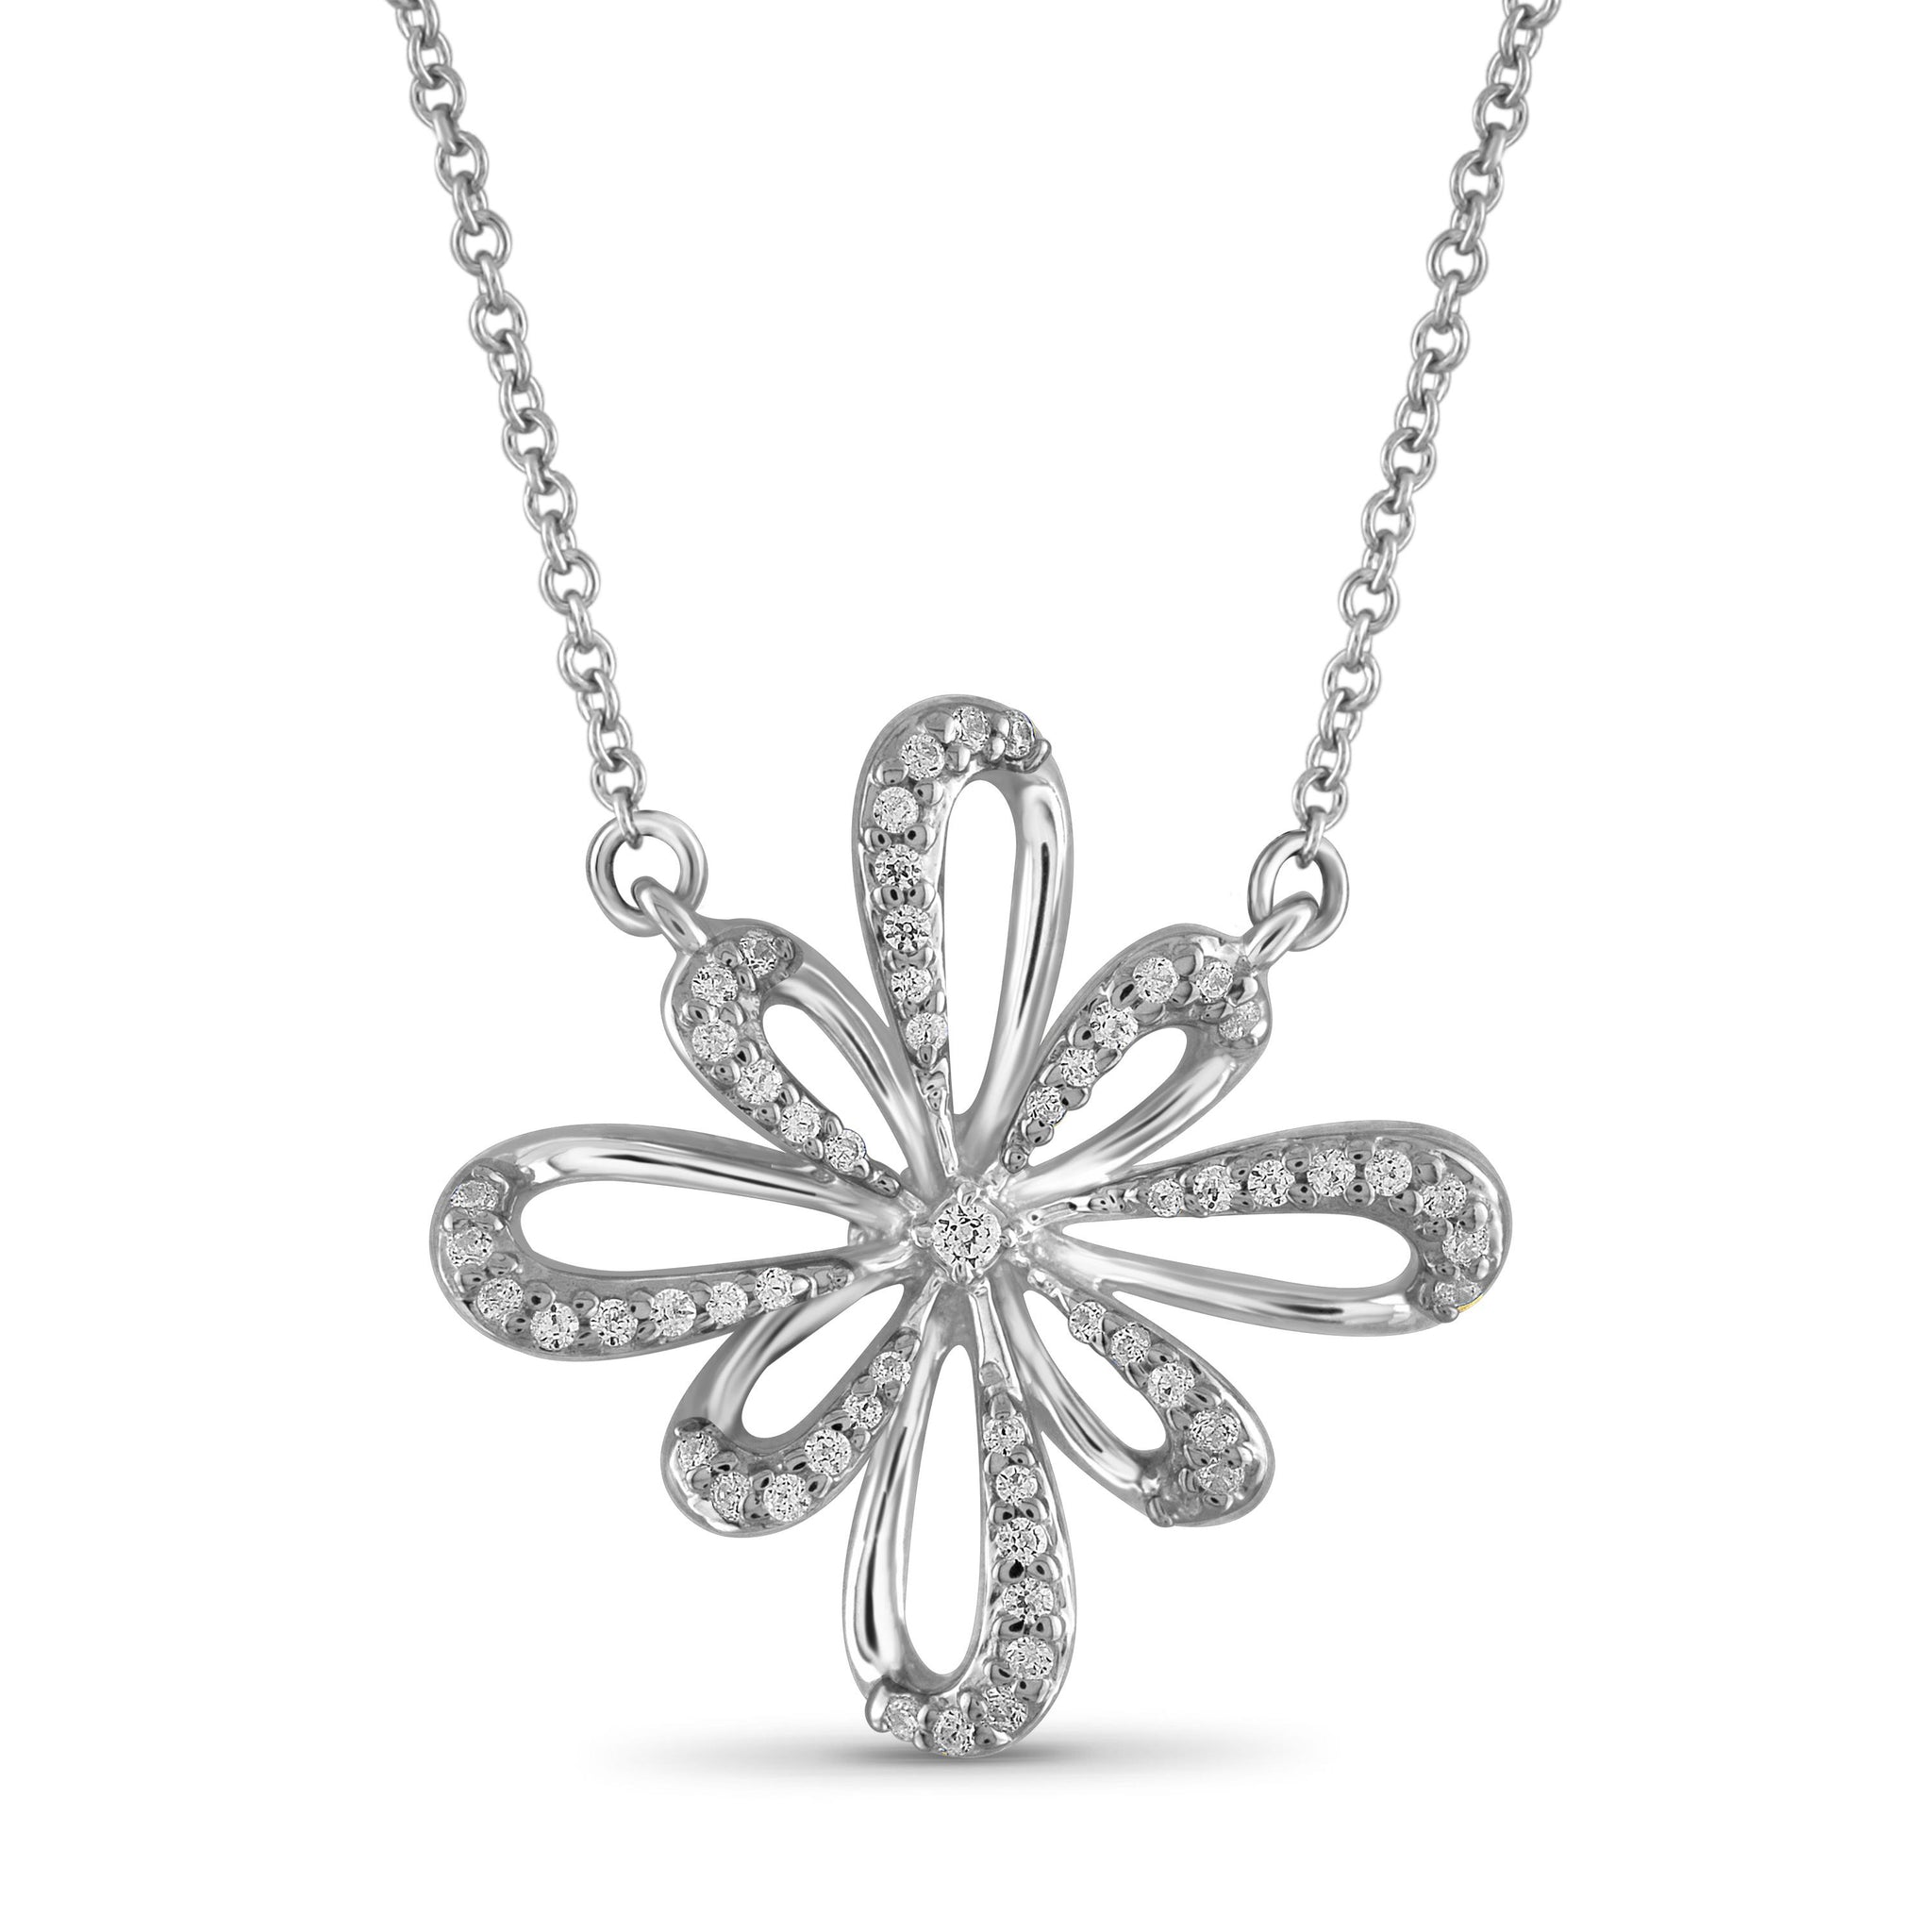 JewelonFire 1/4 Carat T.W. White Diamond Sterling Silver Flower Pendant - Assorted Colors